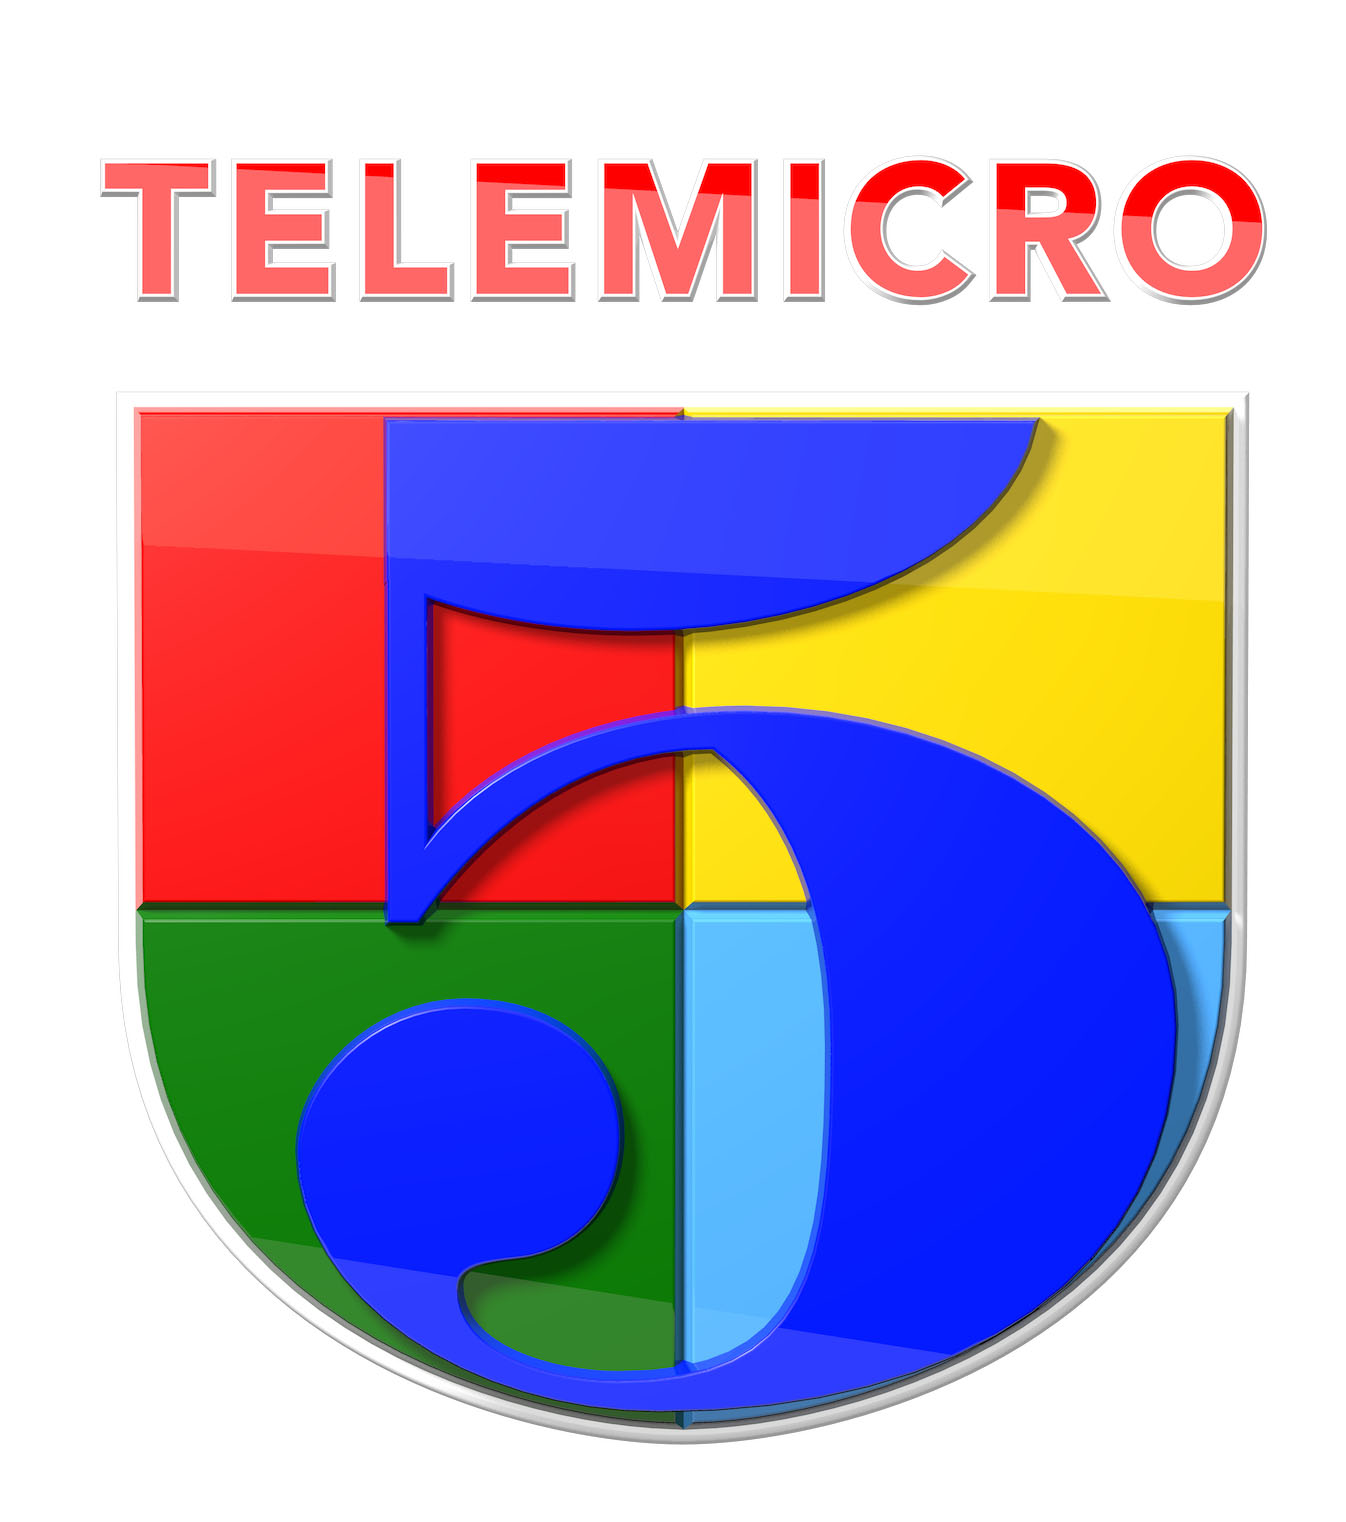 ajla hadzalic recommends canal 5 en vivo telemicro pic